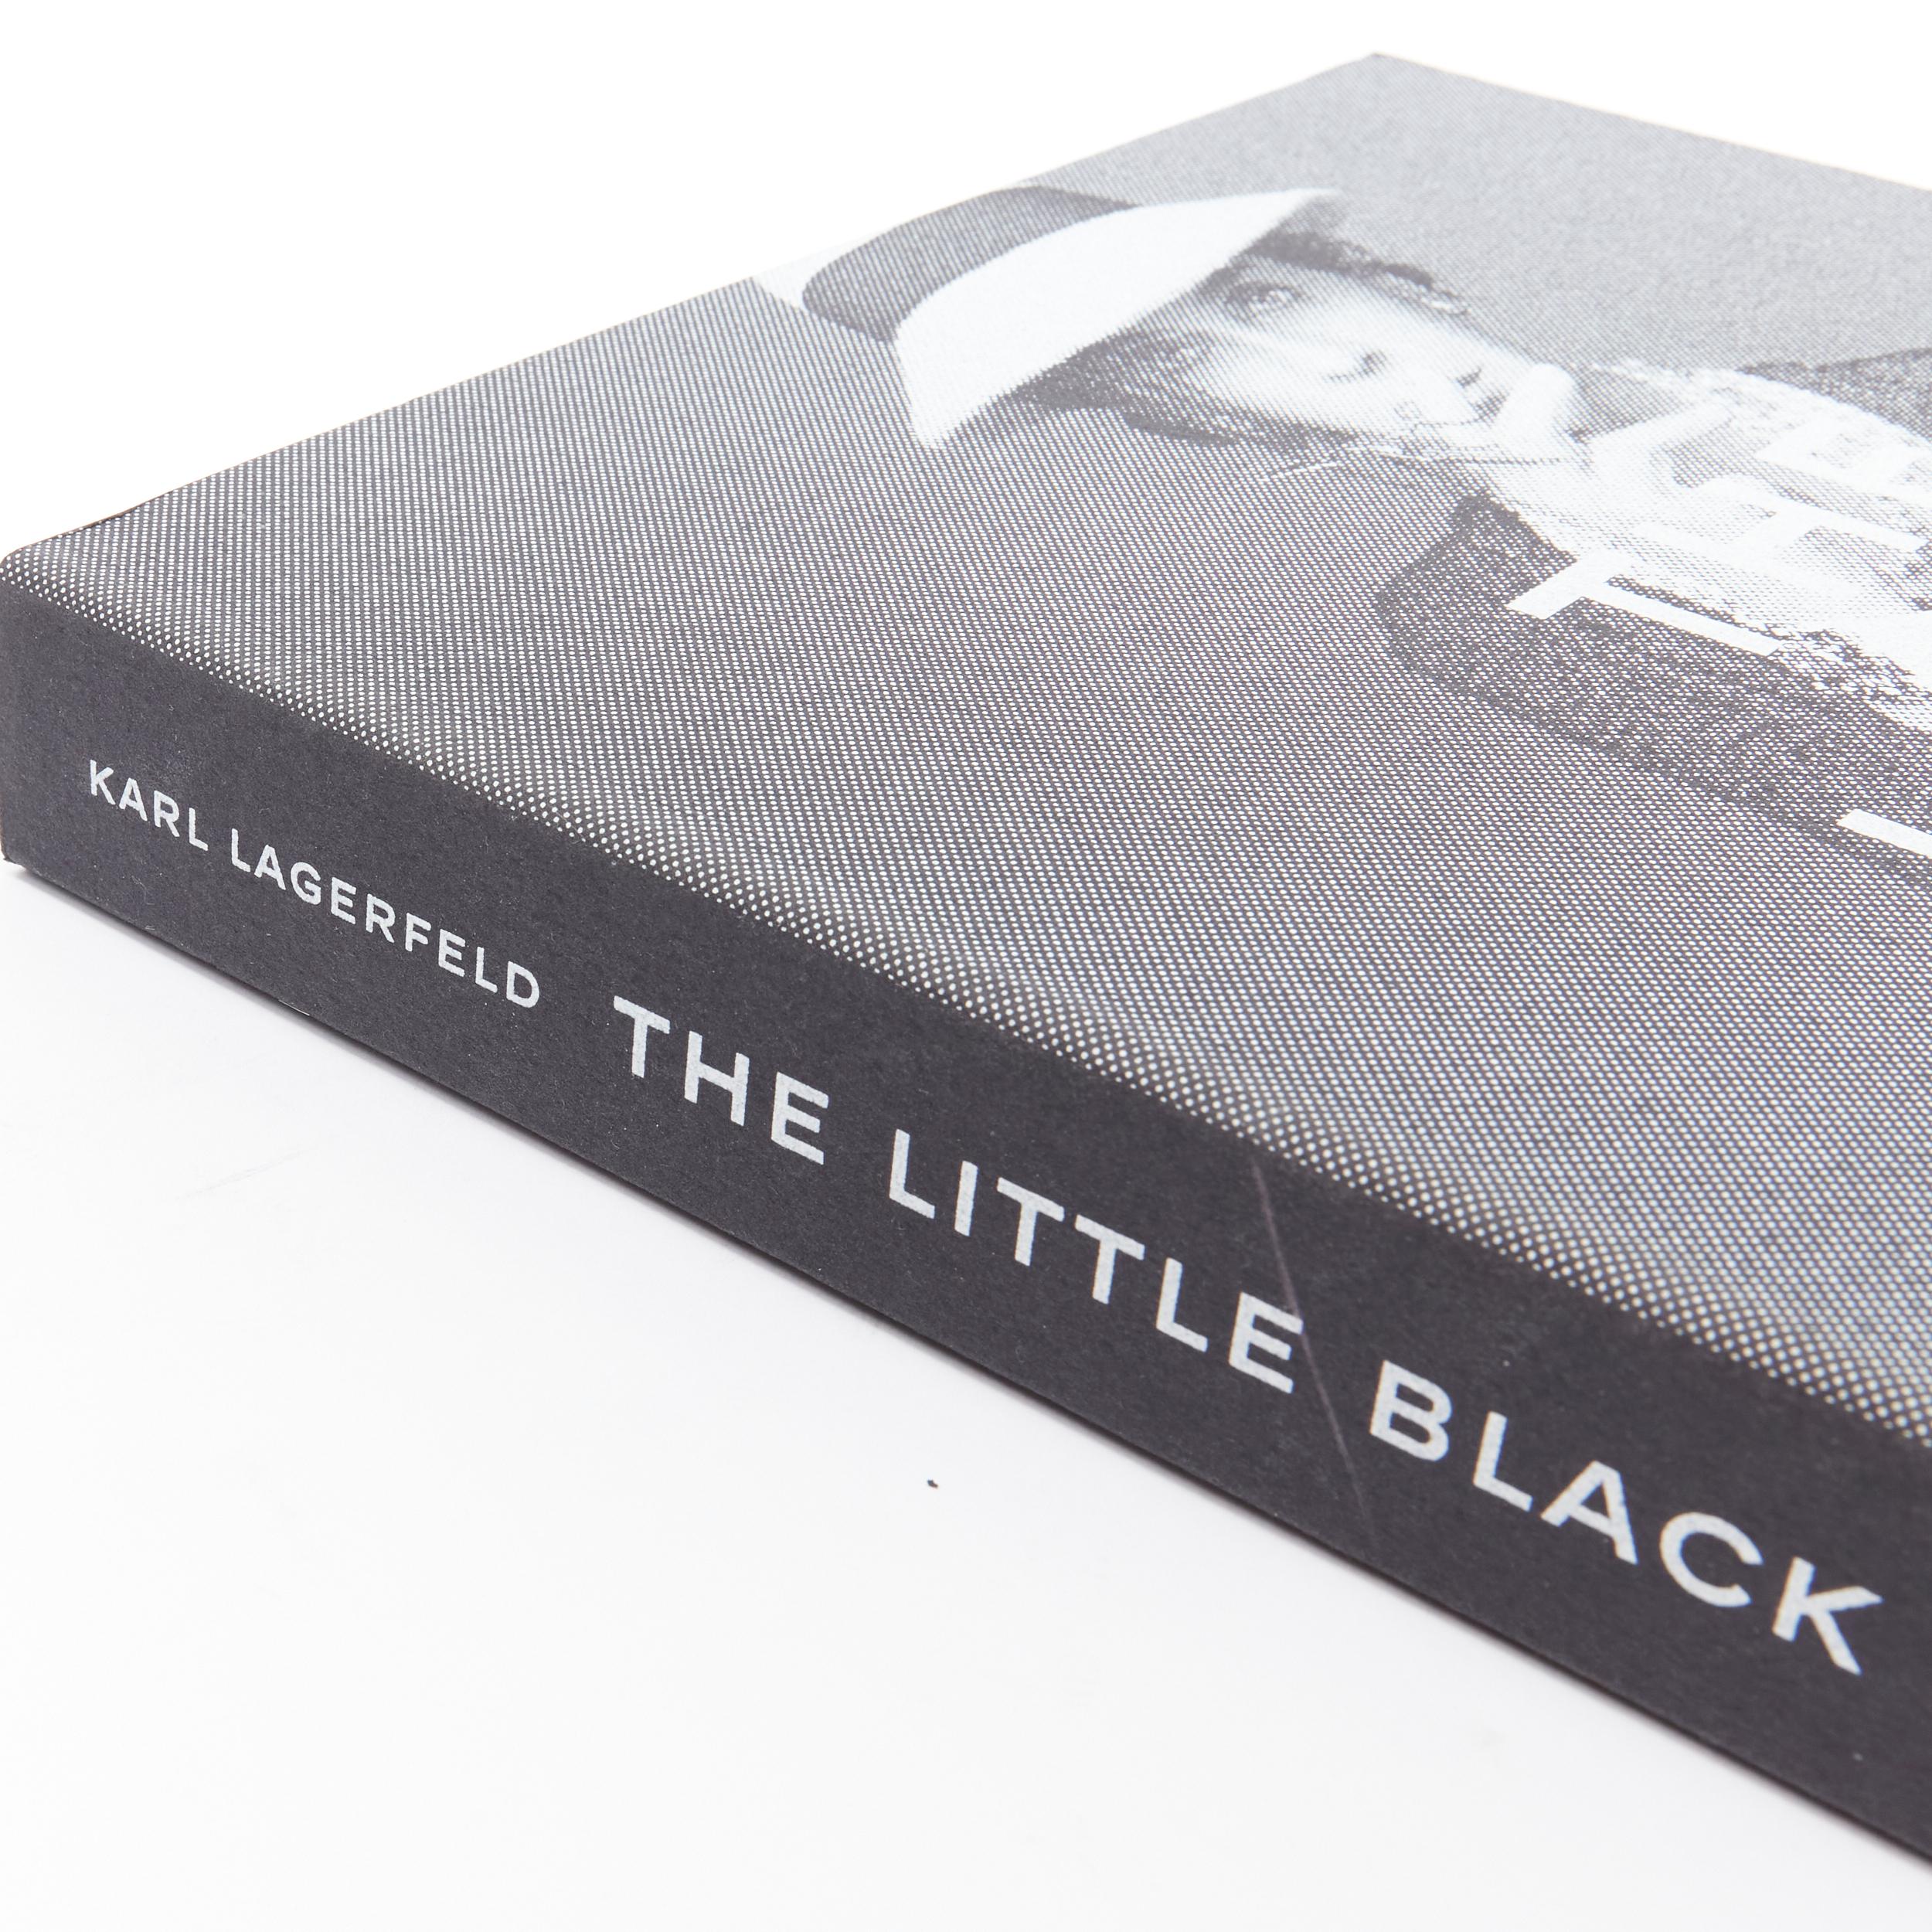 CHANEL The Little Black Jacket Karl Lagerfeld Carine Roitfeld Hard case book 2